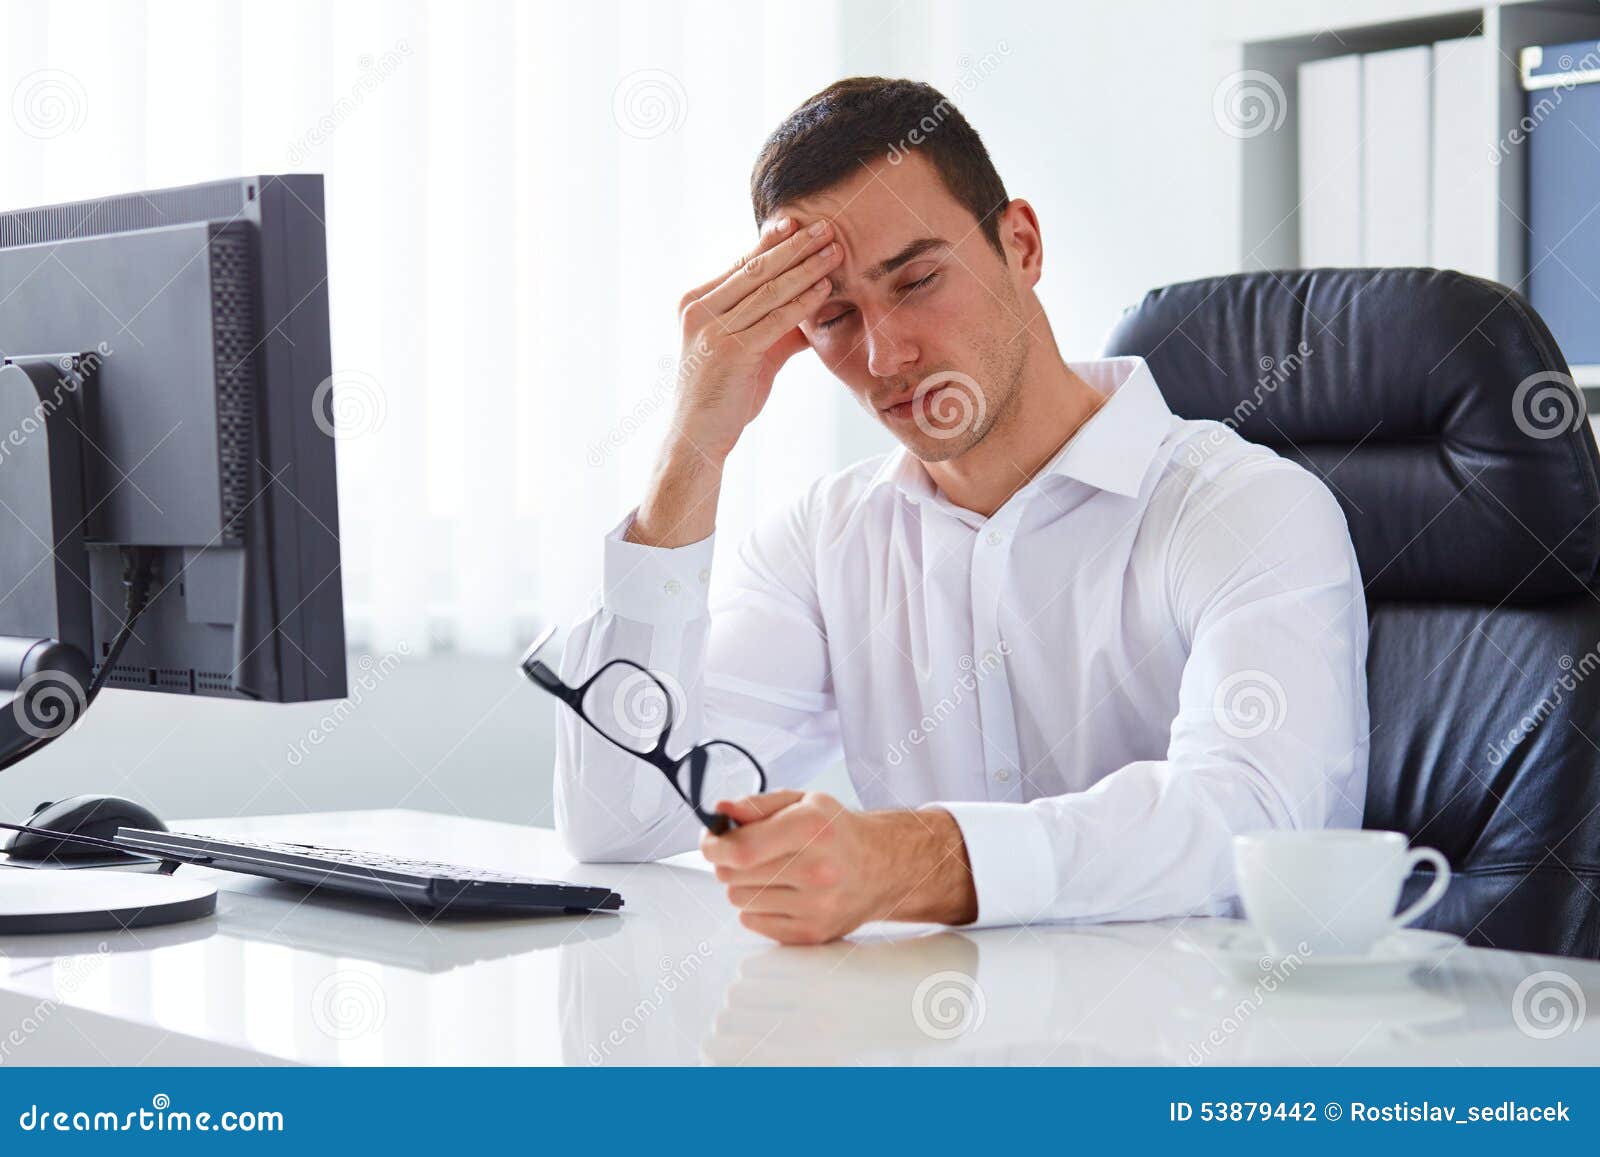 man under stress with headache and migraine